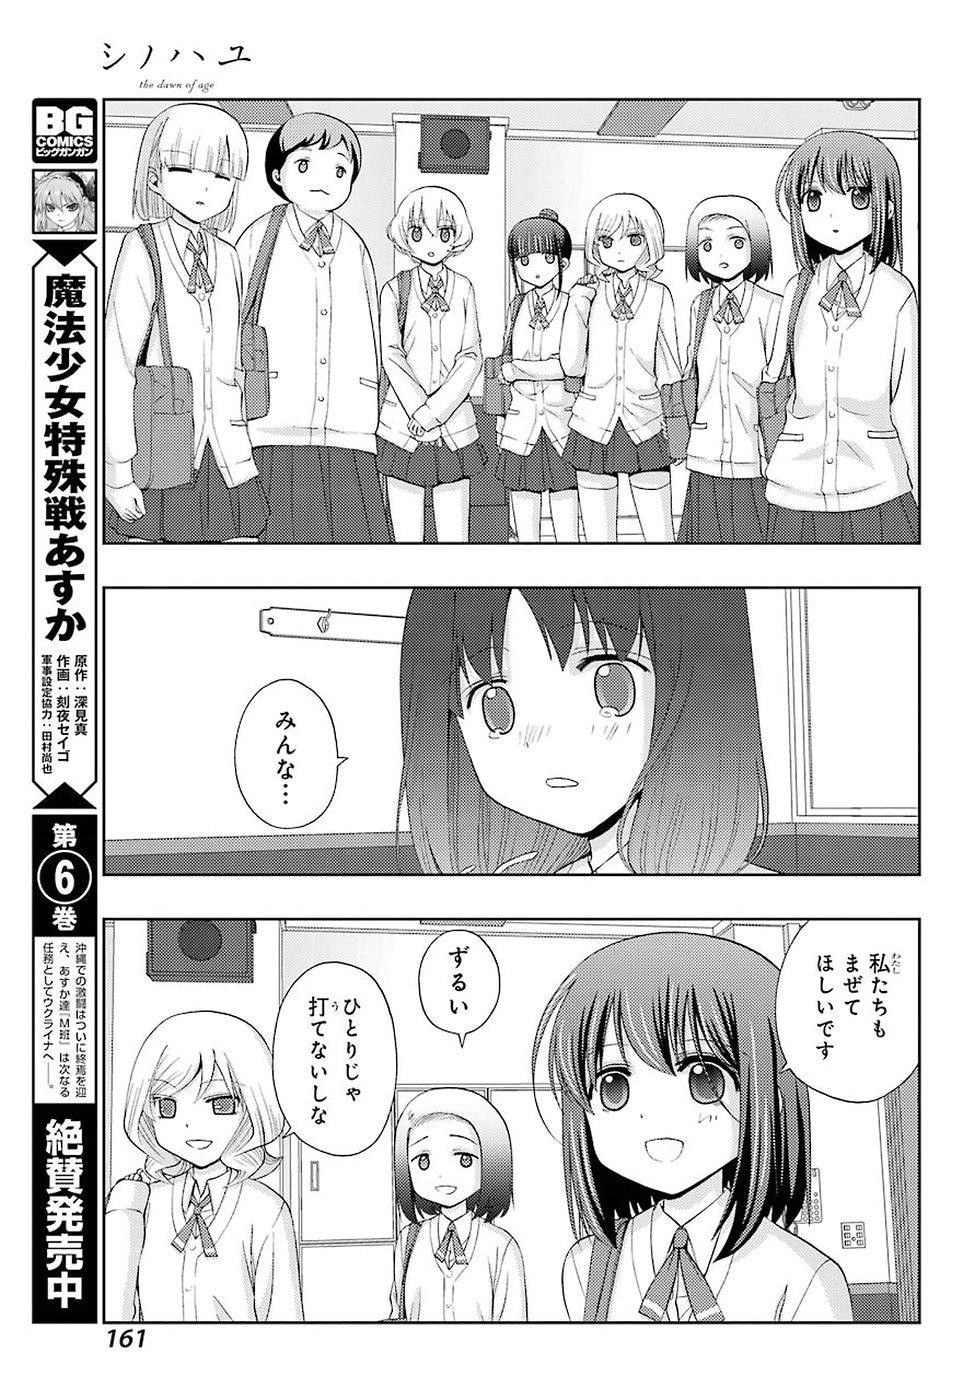 Shinohayu - The Dawn of Age Manga - Chapter 053 - Page 17